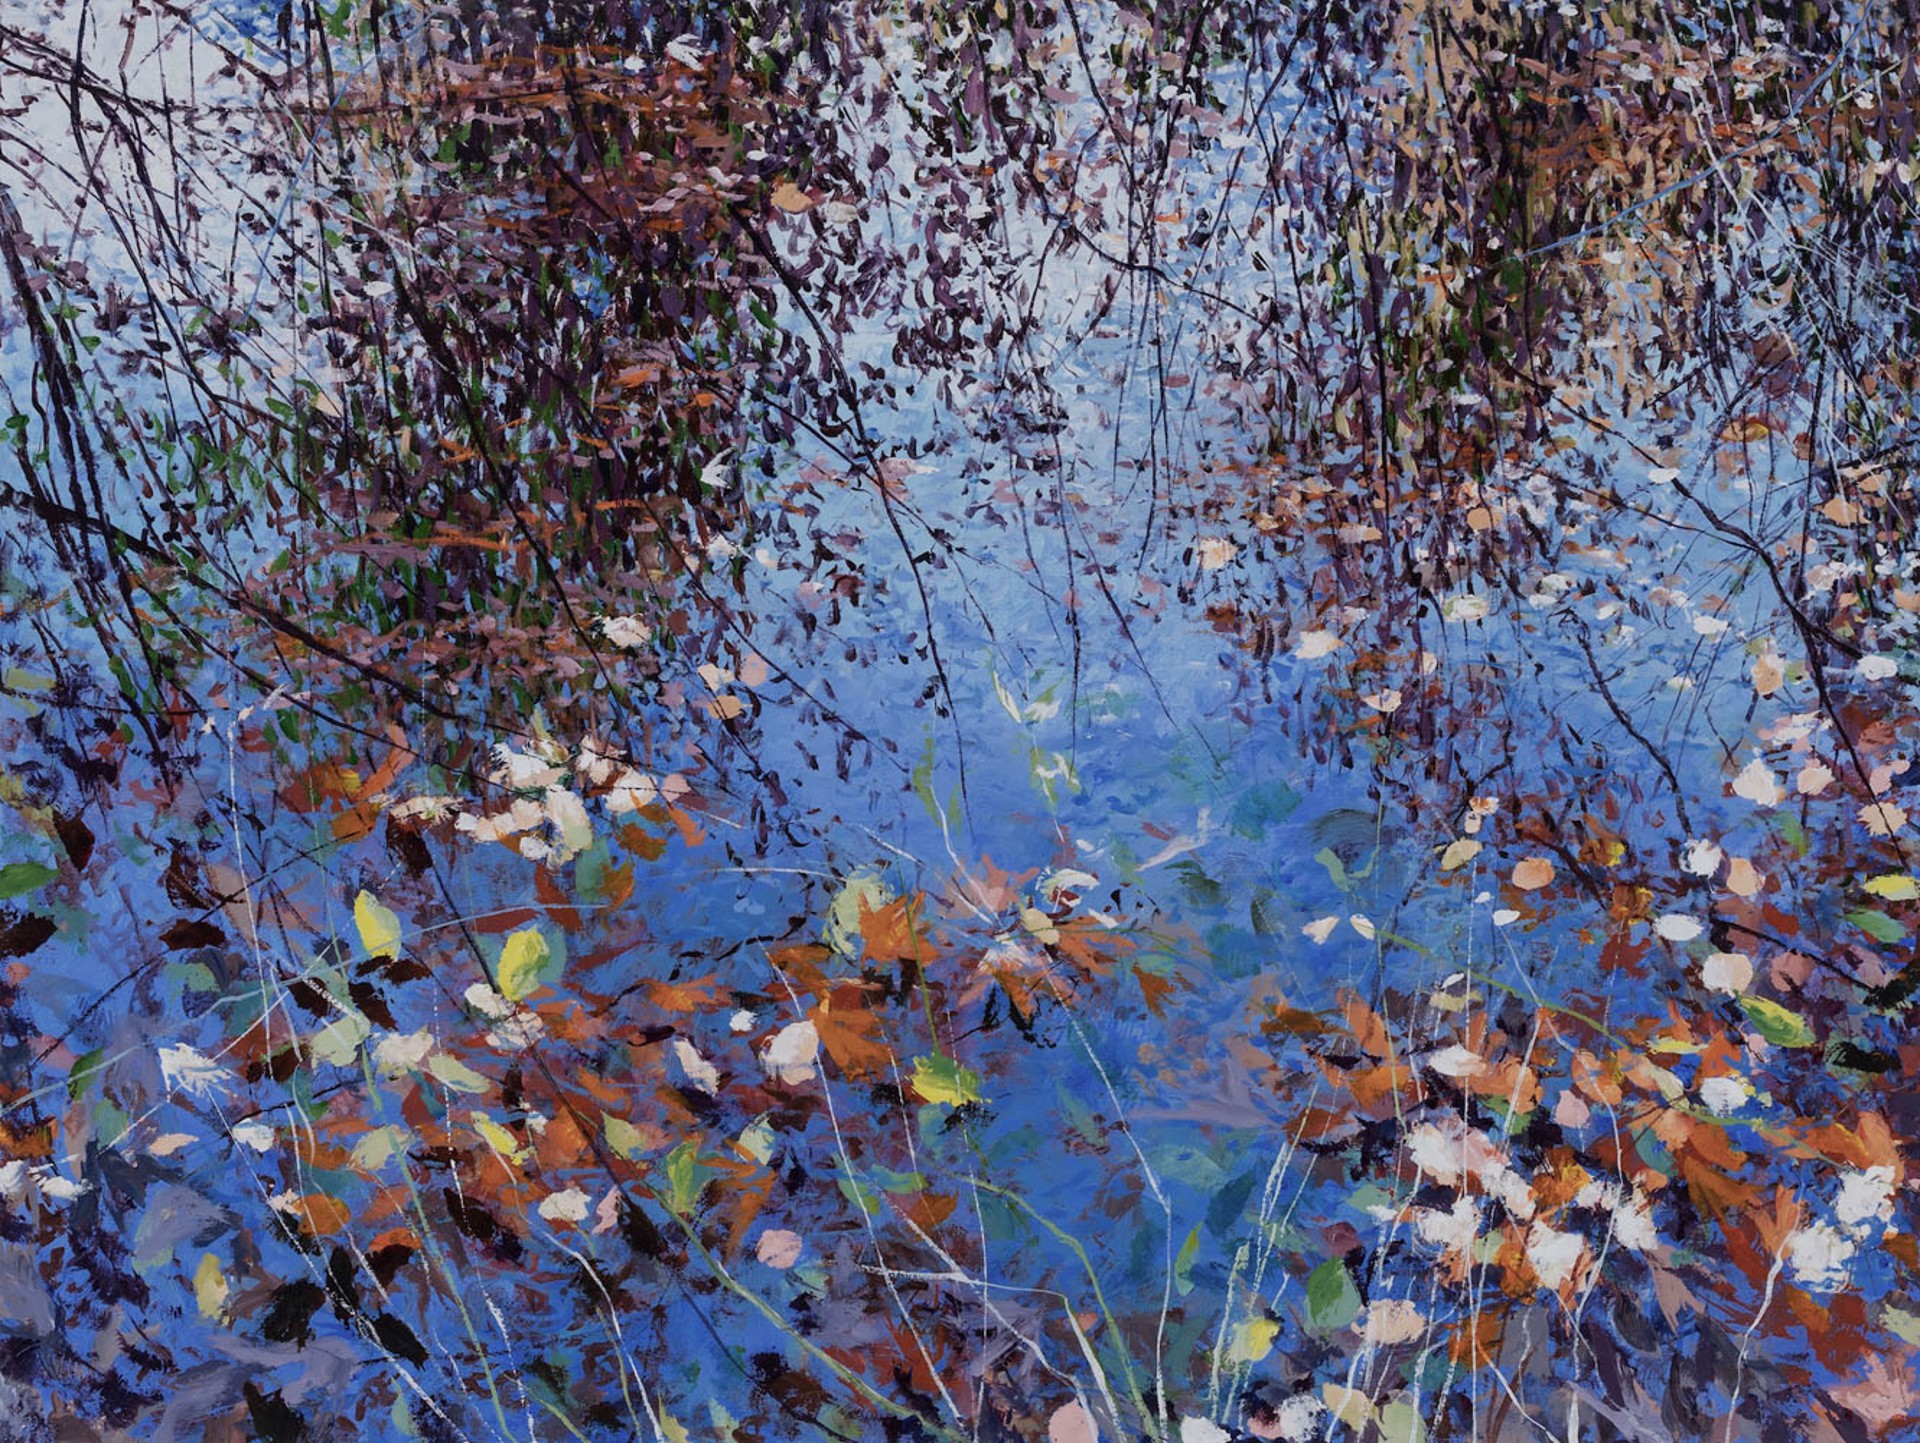 Gathering Leaves by Angelita Surmon